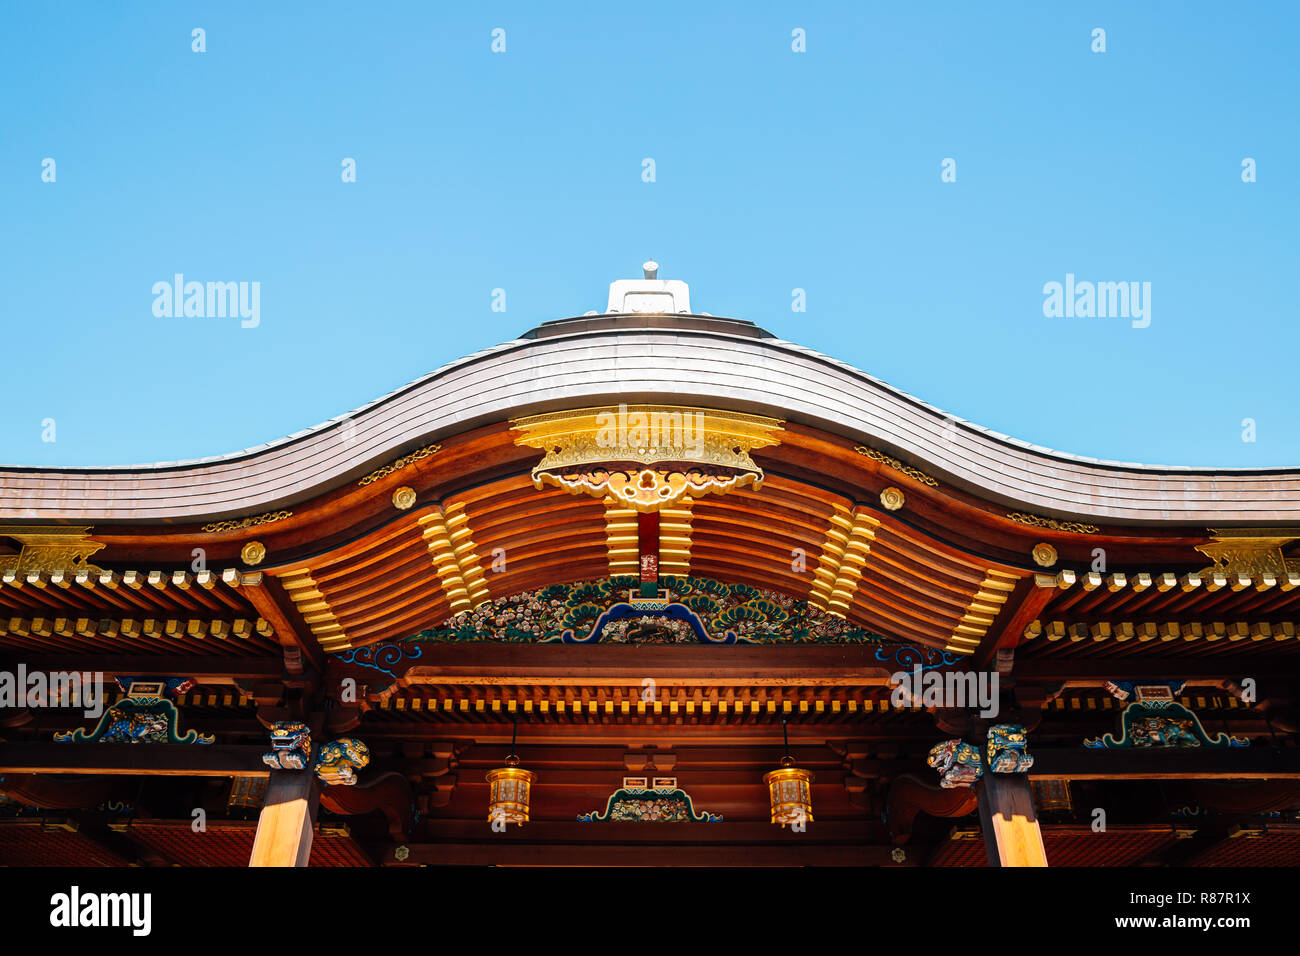 Yushima Tenmangu traditional architecture in Tokyo, Japan Stock Photo